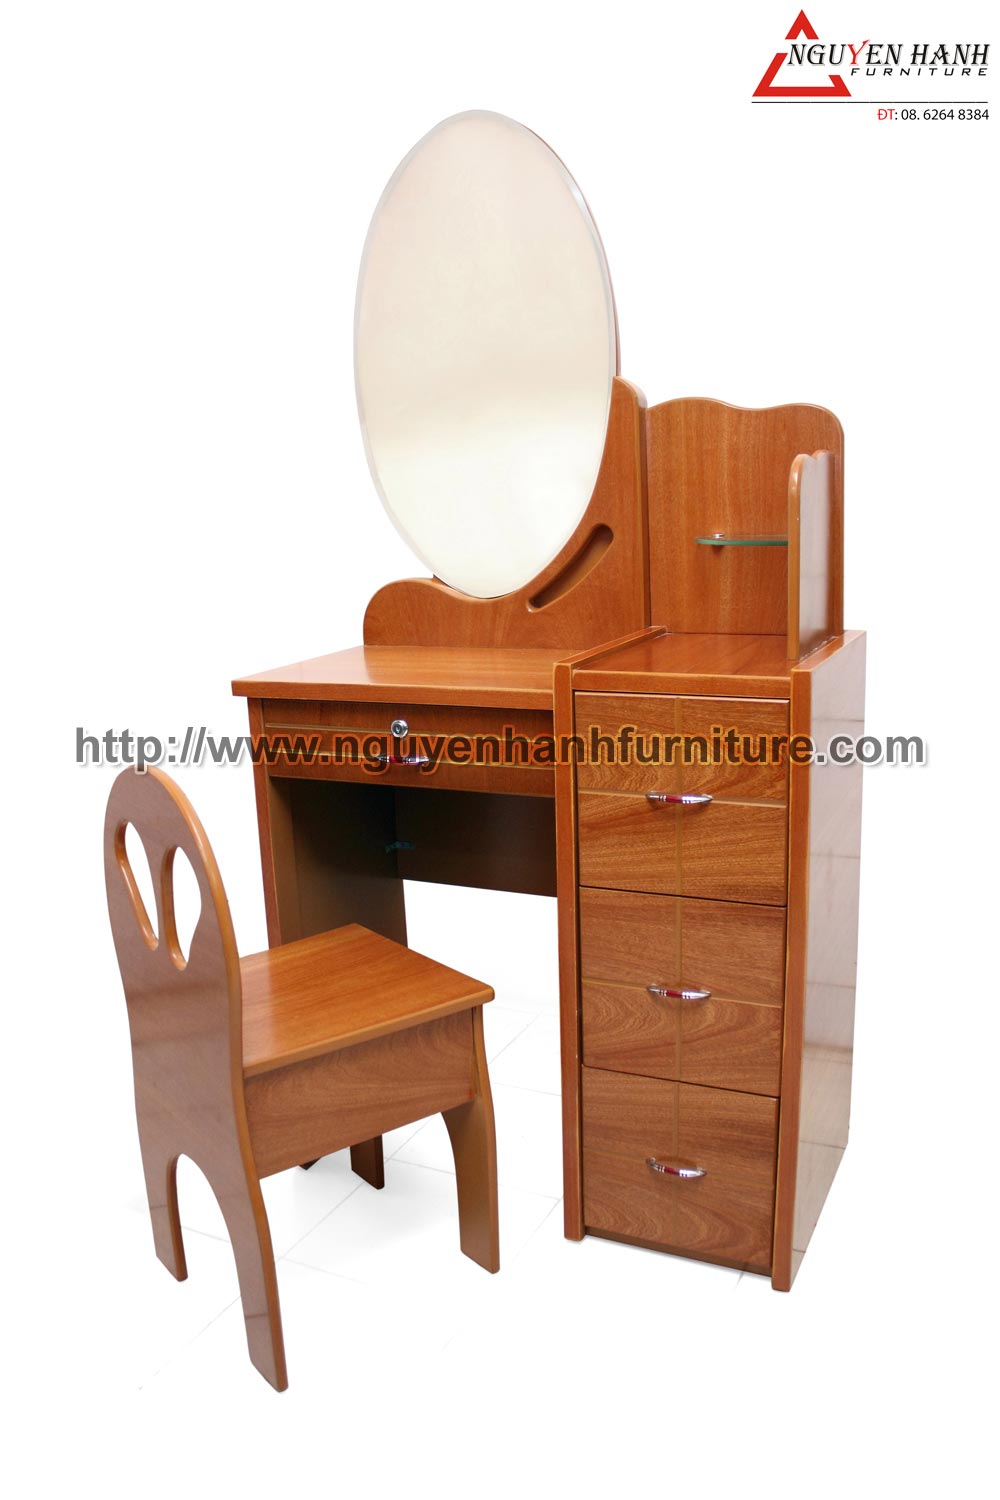 Name product: Oval shape Makeup desk 